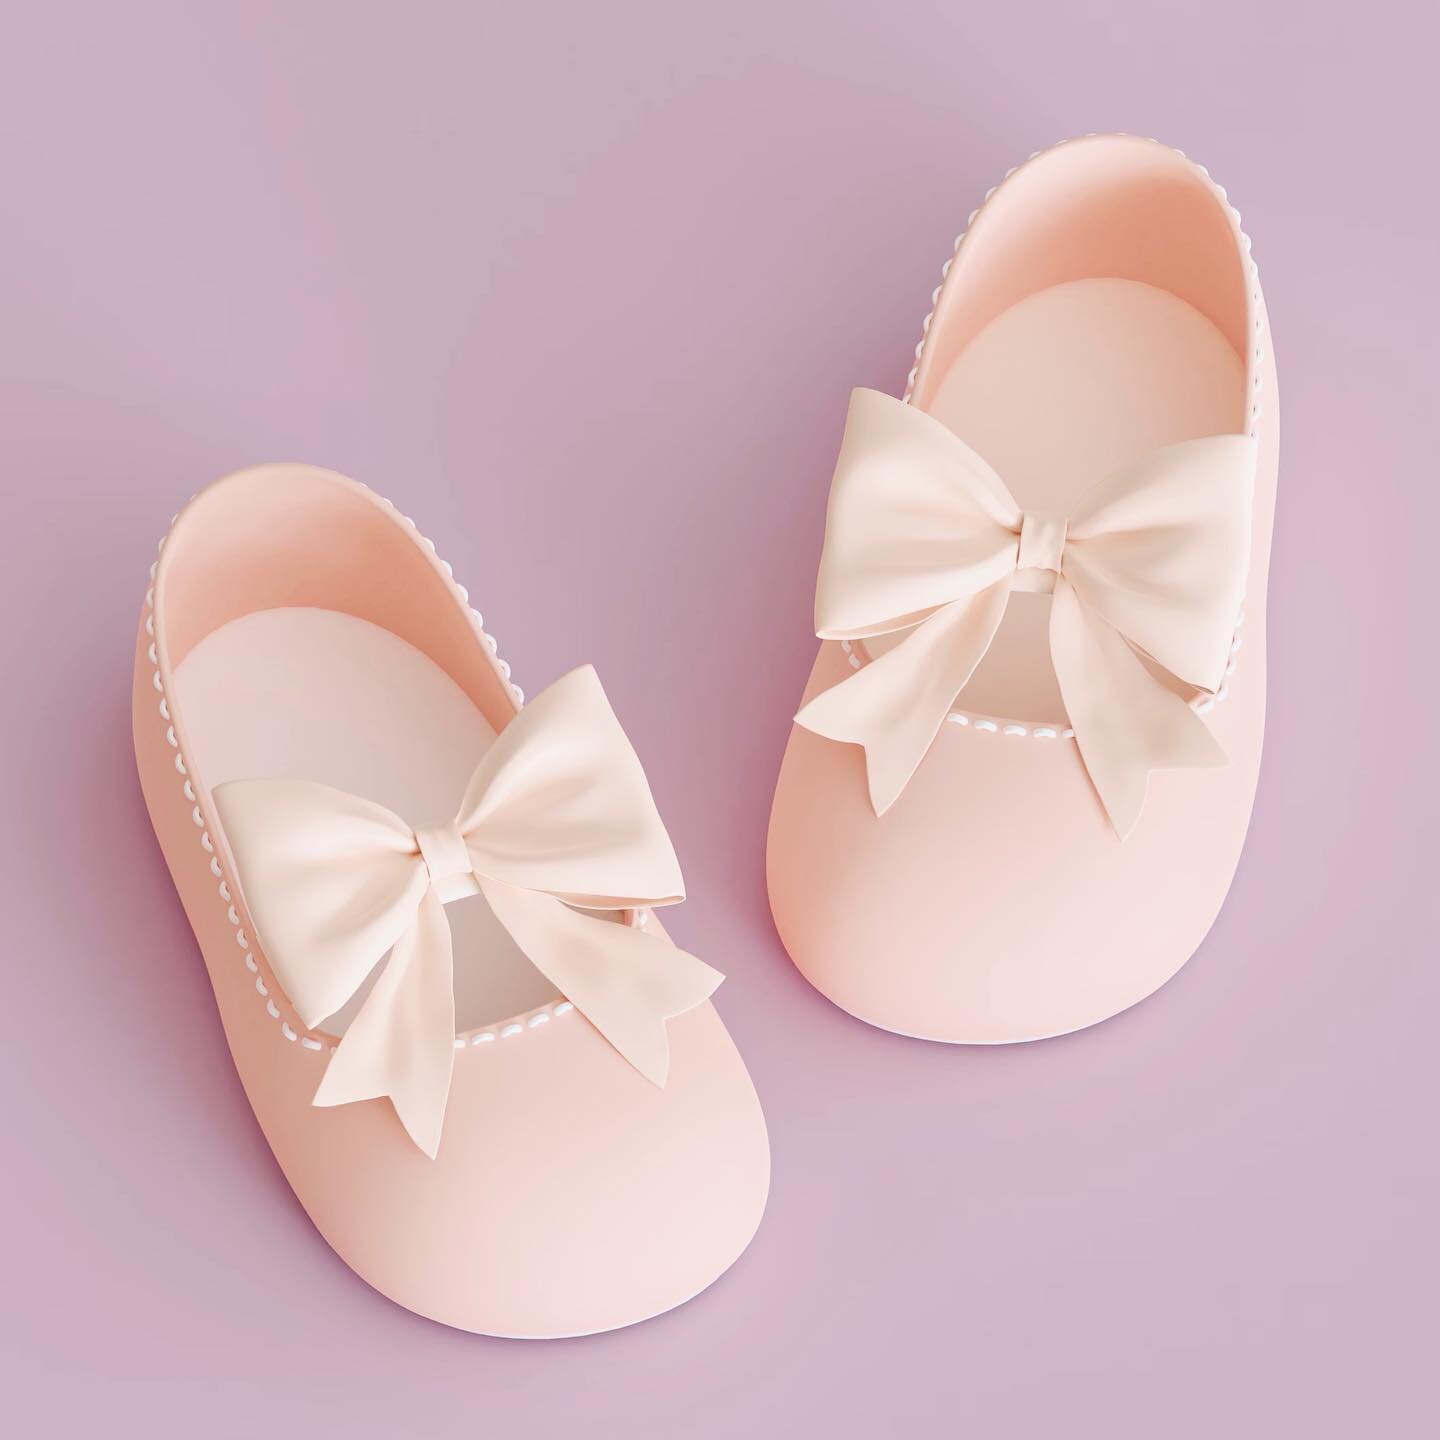 Little baby shoes 🩰 made in zbrush and rendered in blender ✨

#3dart #3dillustration #3d #3dmodeling #digitalart #zbrush #zbrushart #blender3d #cyclesrender #pink #babyshoes